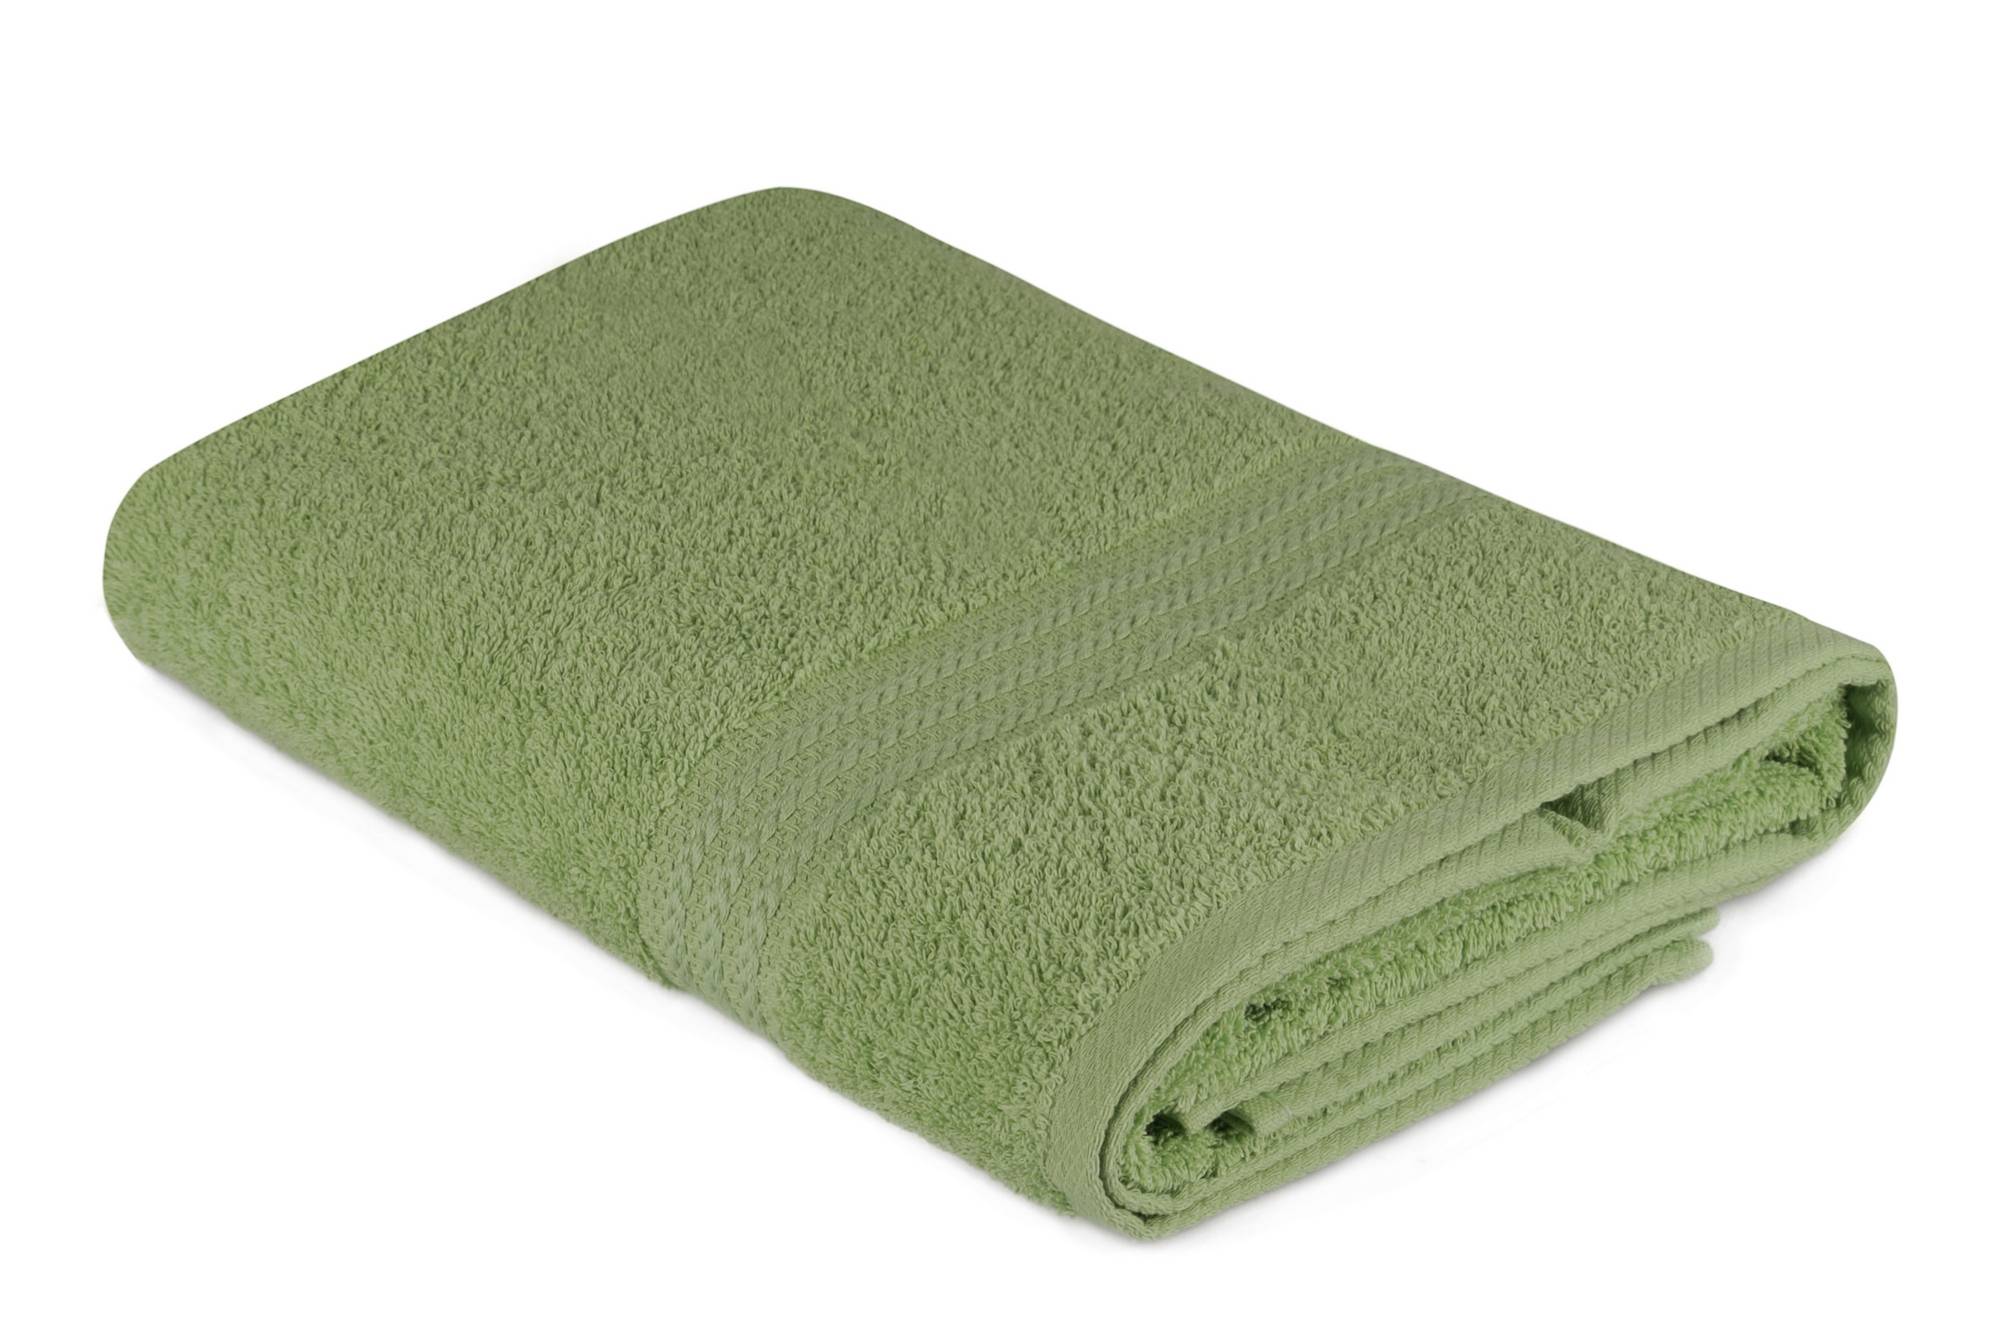  Sicco drie-lijns geborduurde badhanddoek 70 x 140 cm 100 oton Groen